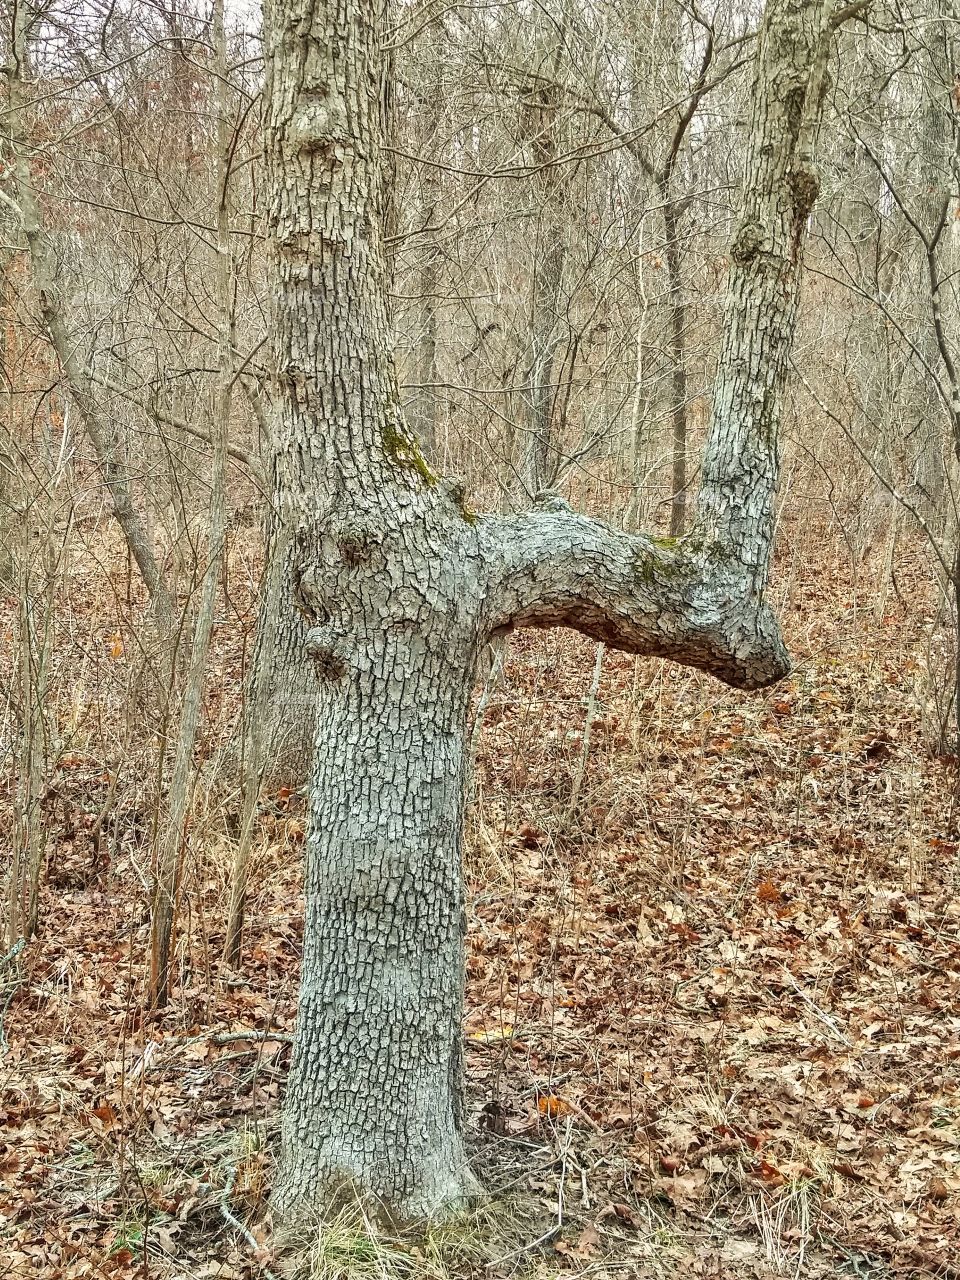 Bent tree along a hiking trail